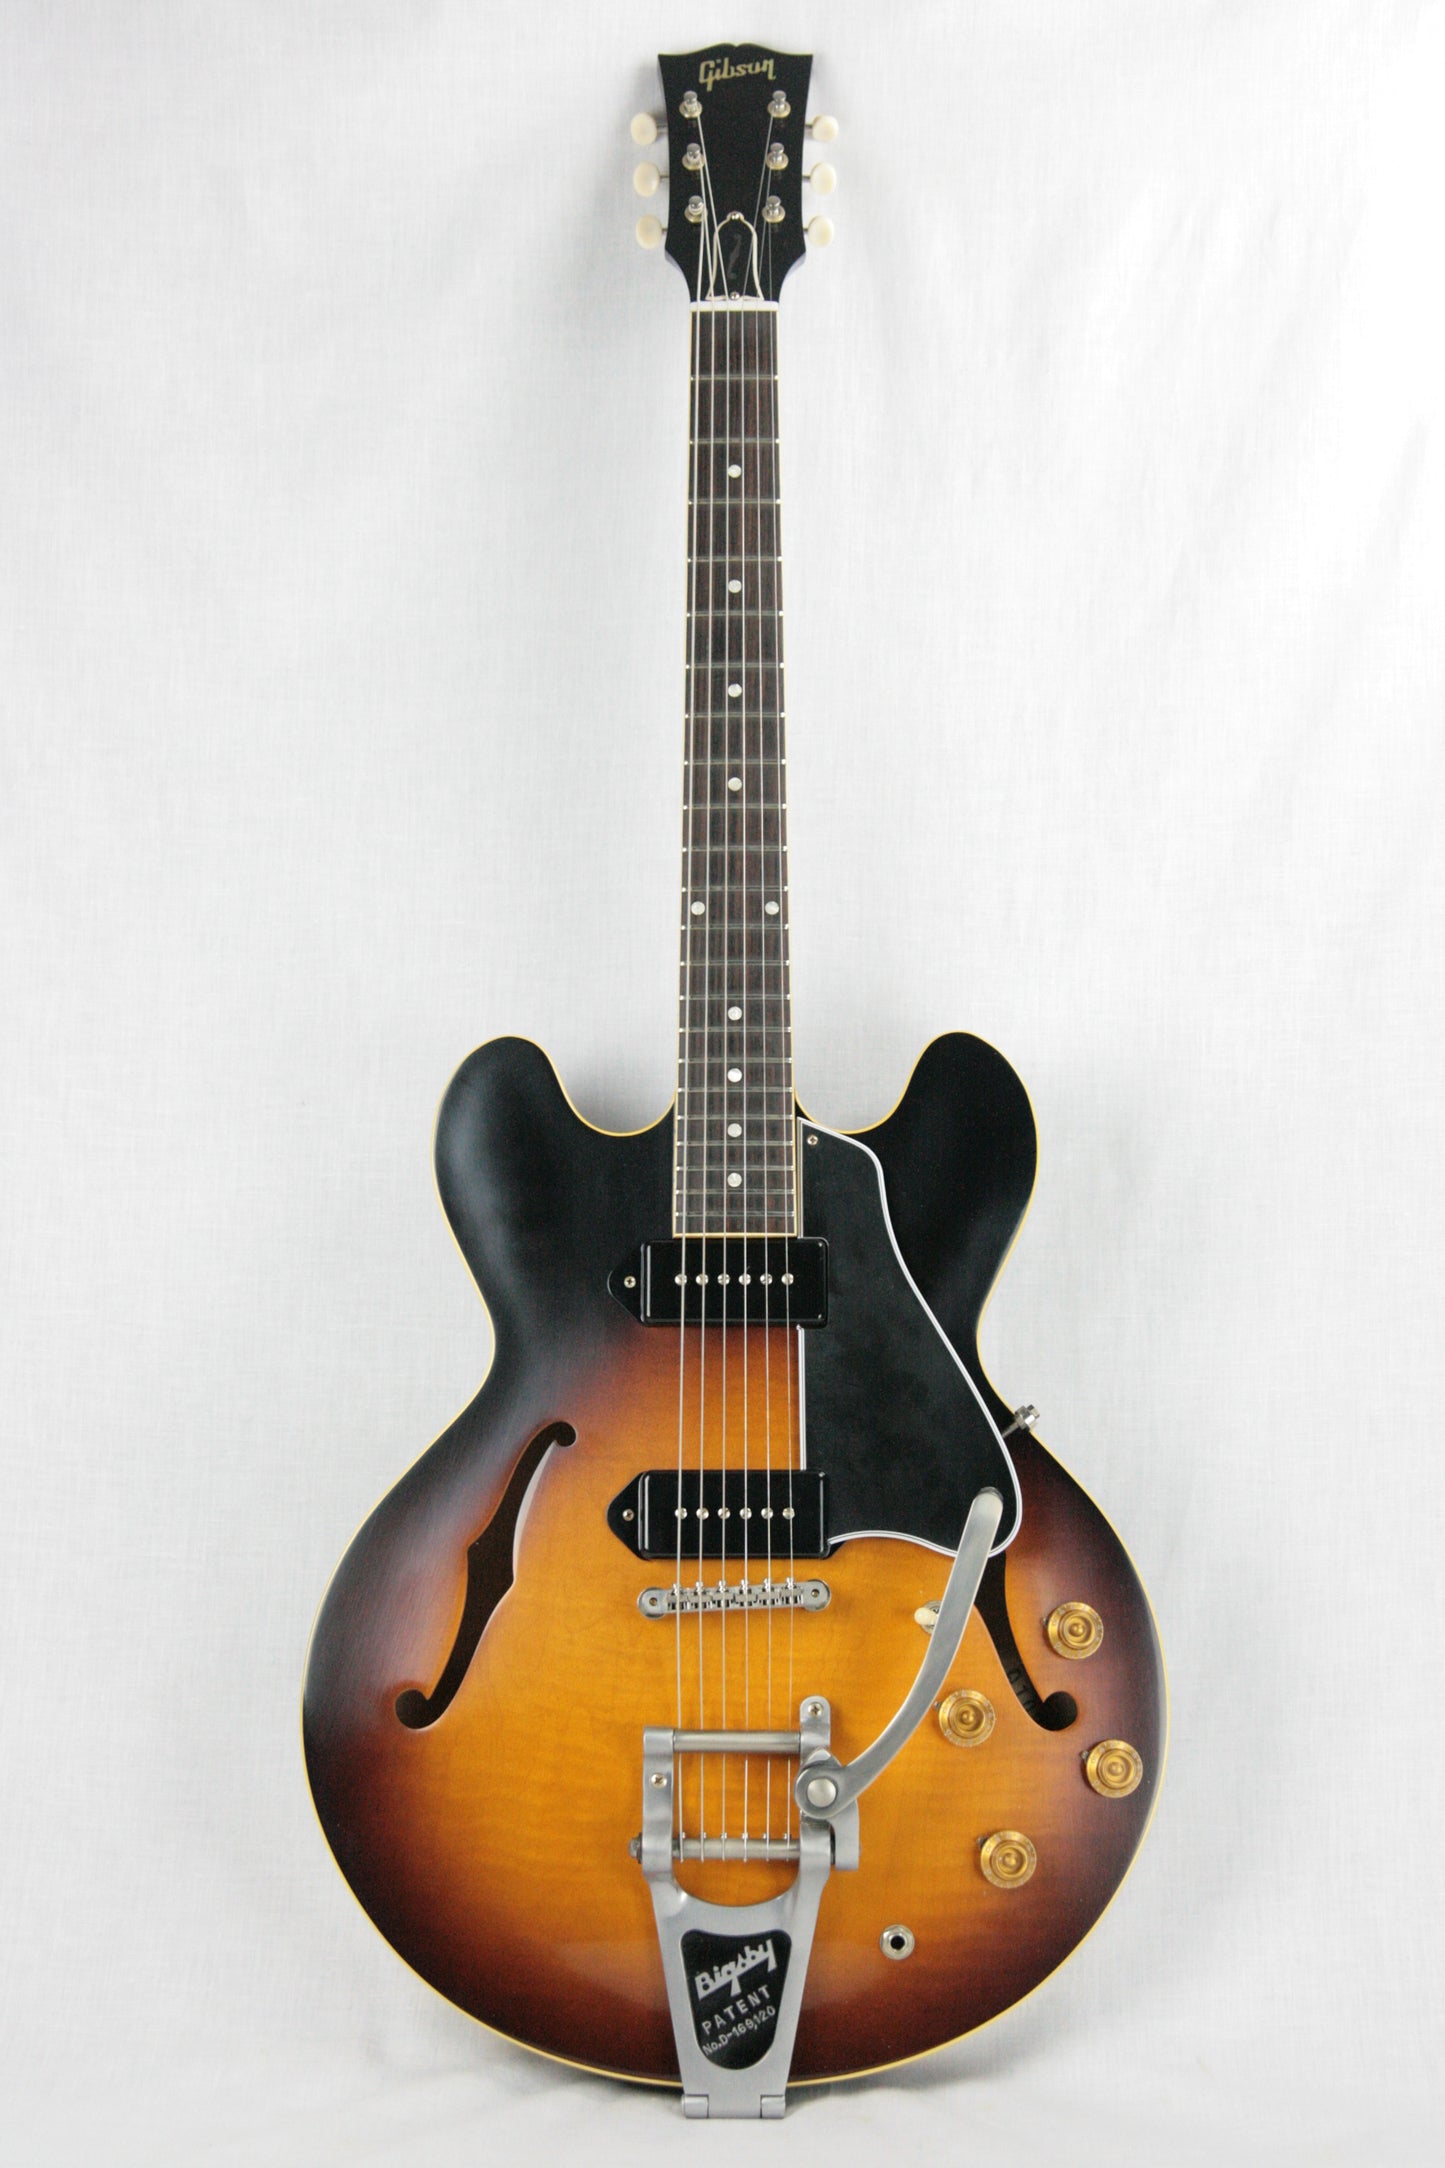 2017 Gibson Memphis '61 Reissue ES-330 FIGURED! 1961 VOS Sunburst! 1960's 1959